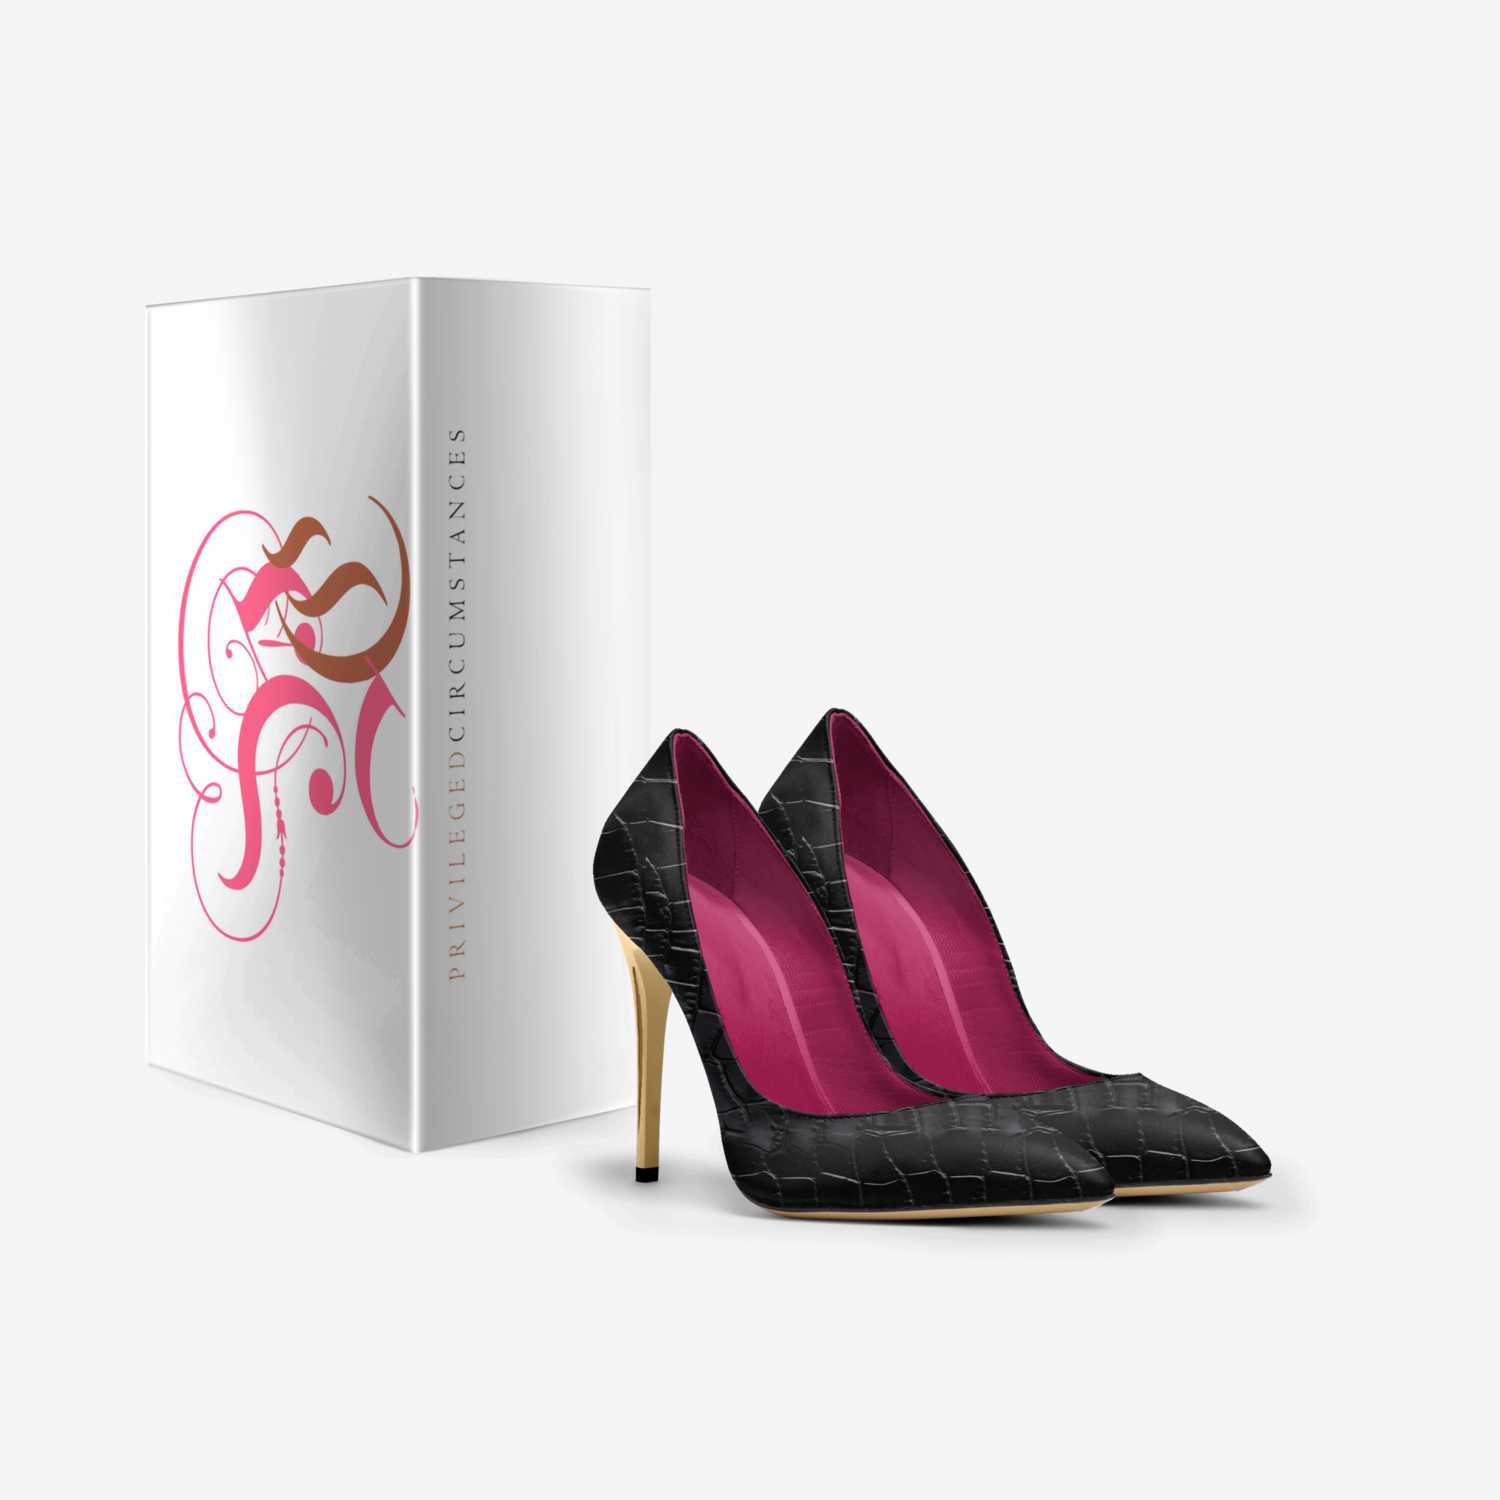 Rock Blac Cr@cs custom made in Italy shoes by Tiffany Lake | Box view